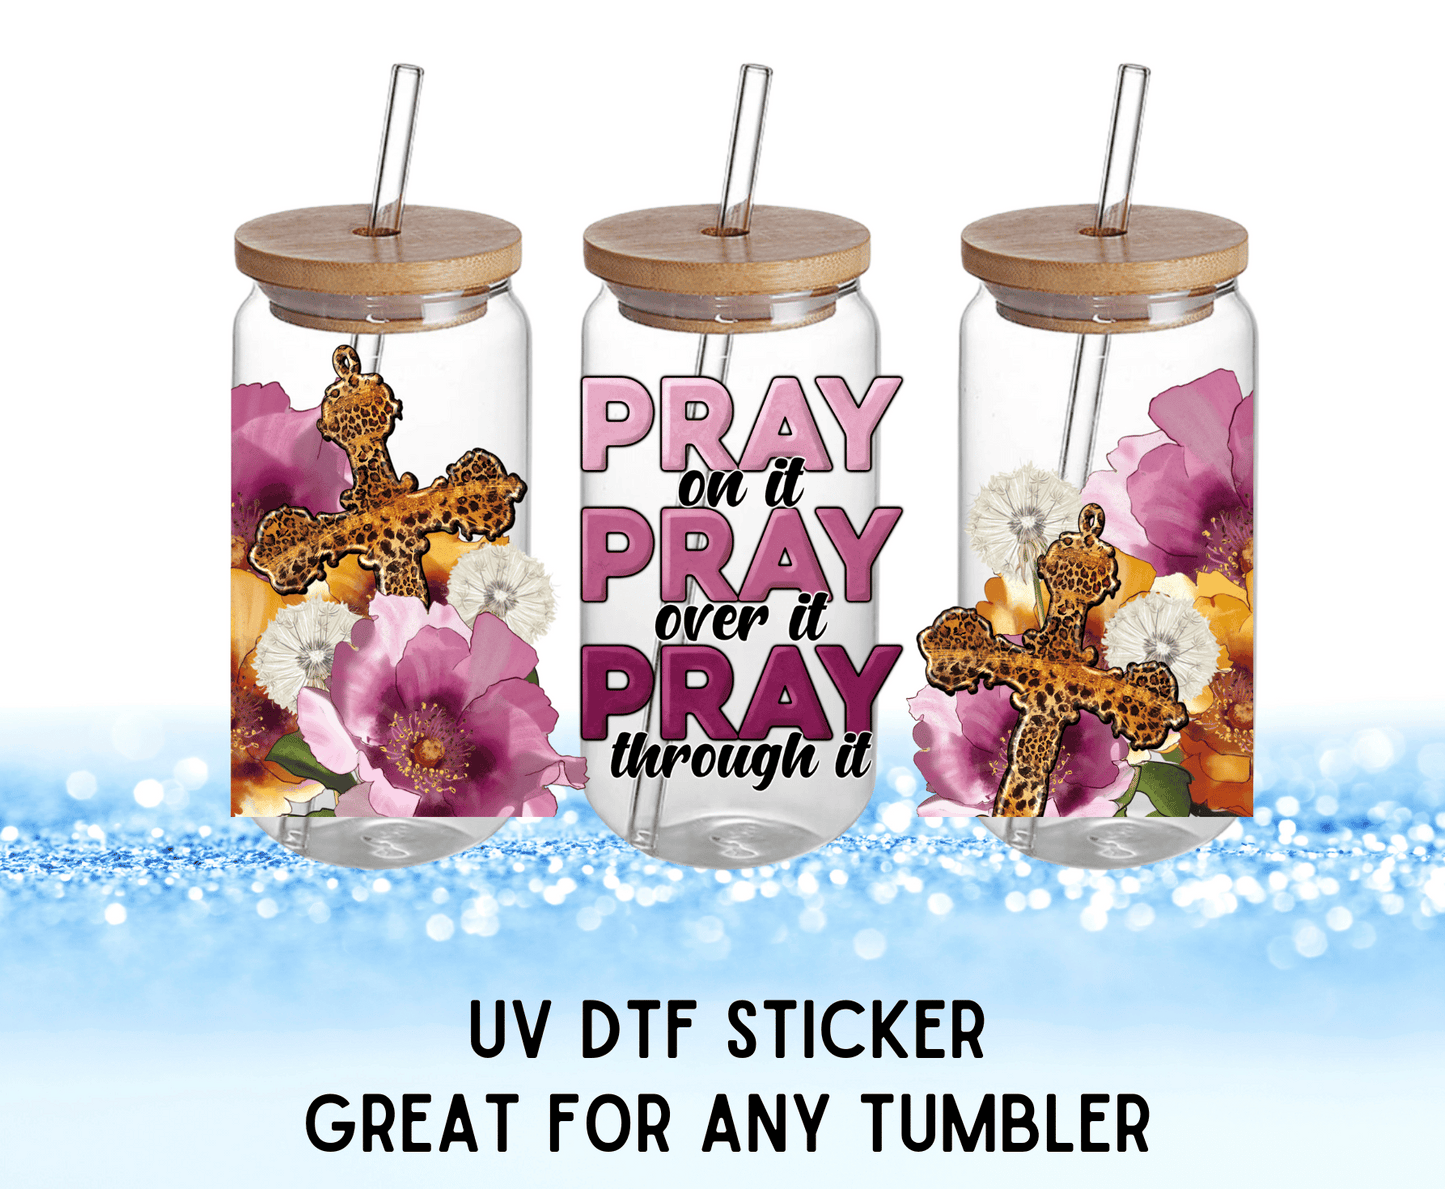 UV DTF Sticker | Pray